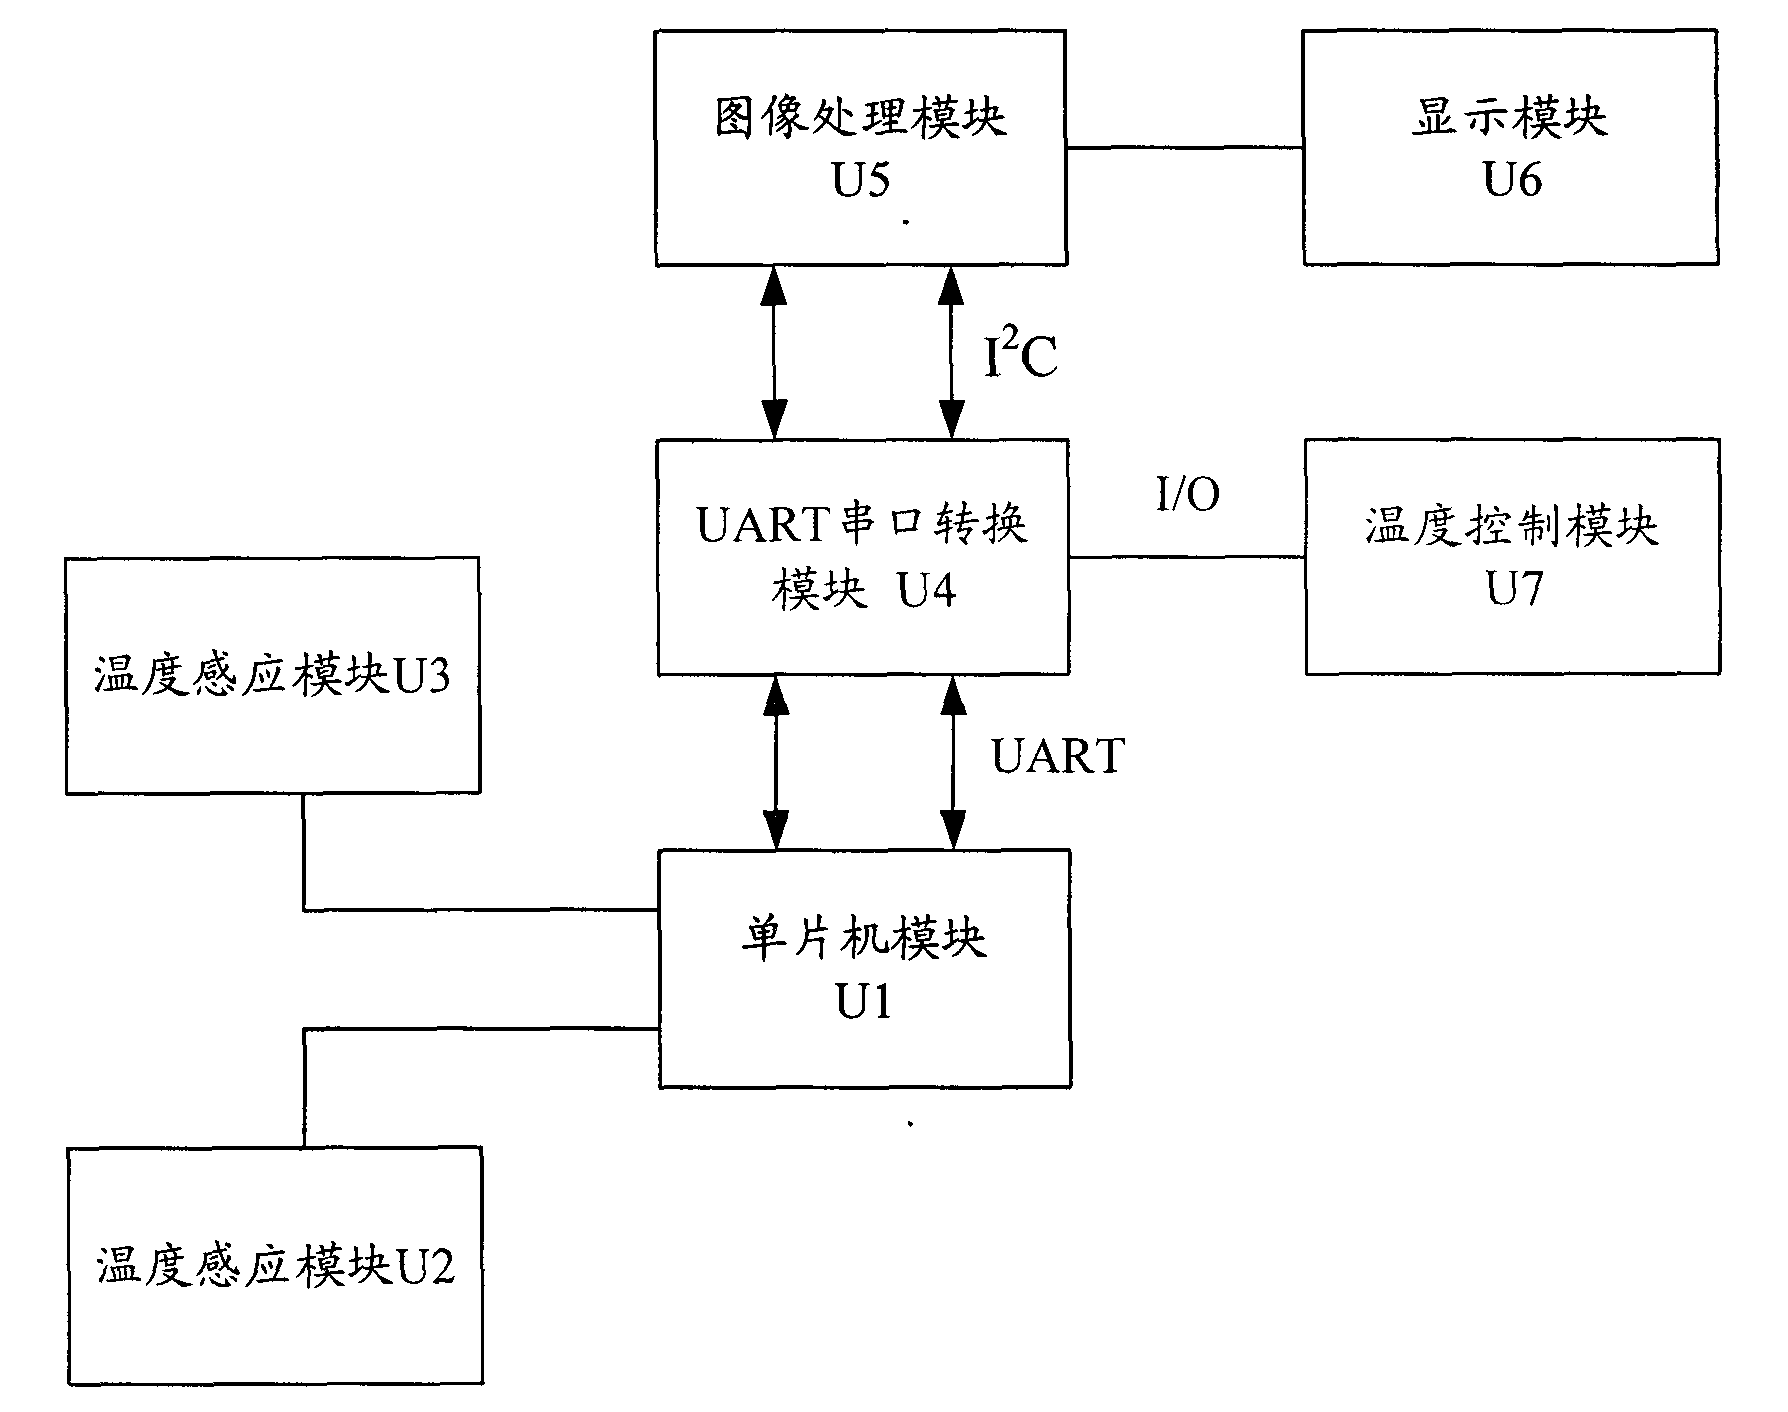 Camera and control method of internal temperature of camera